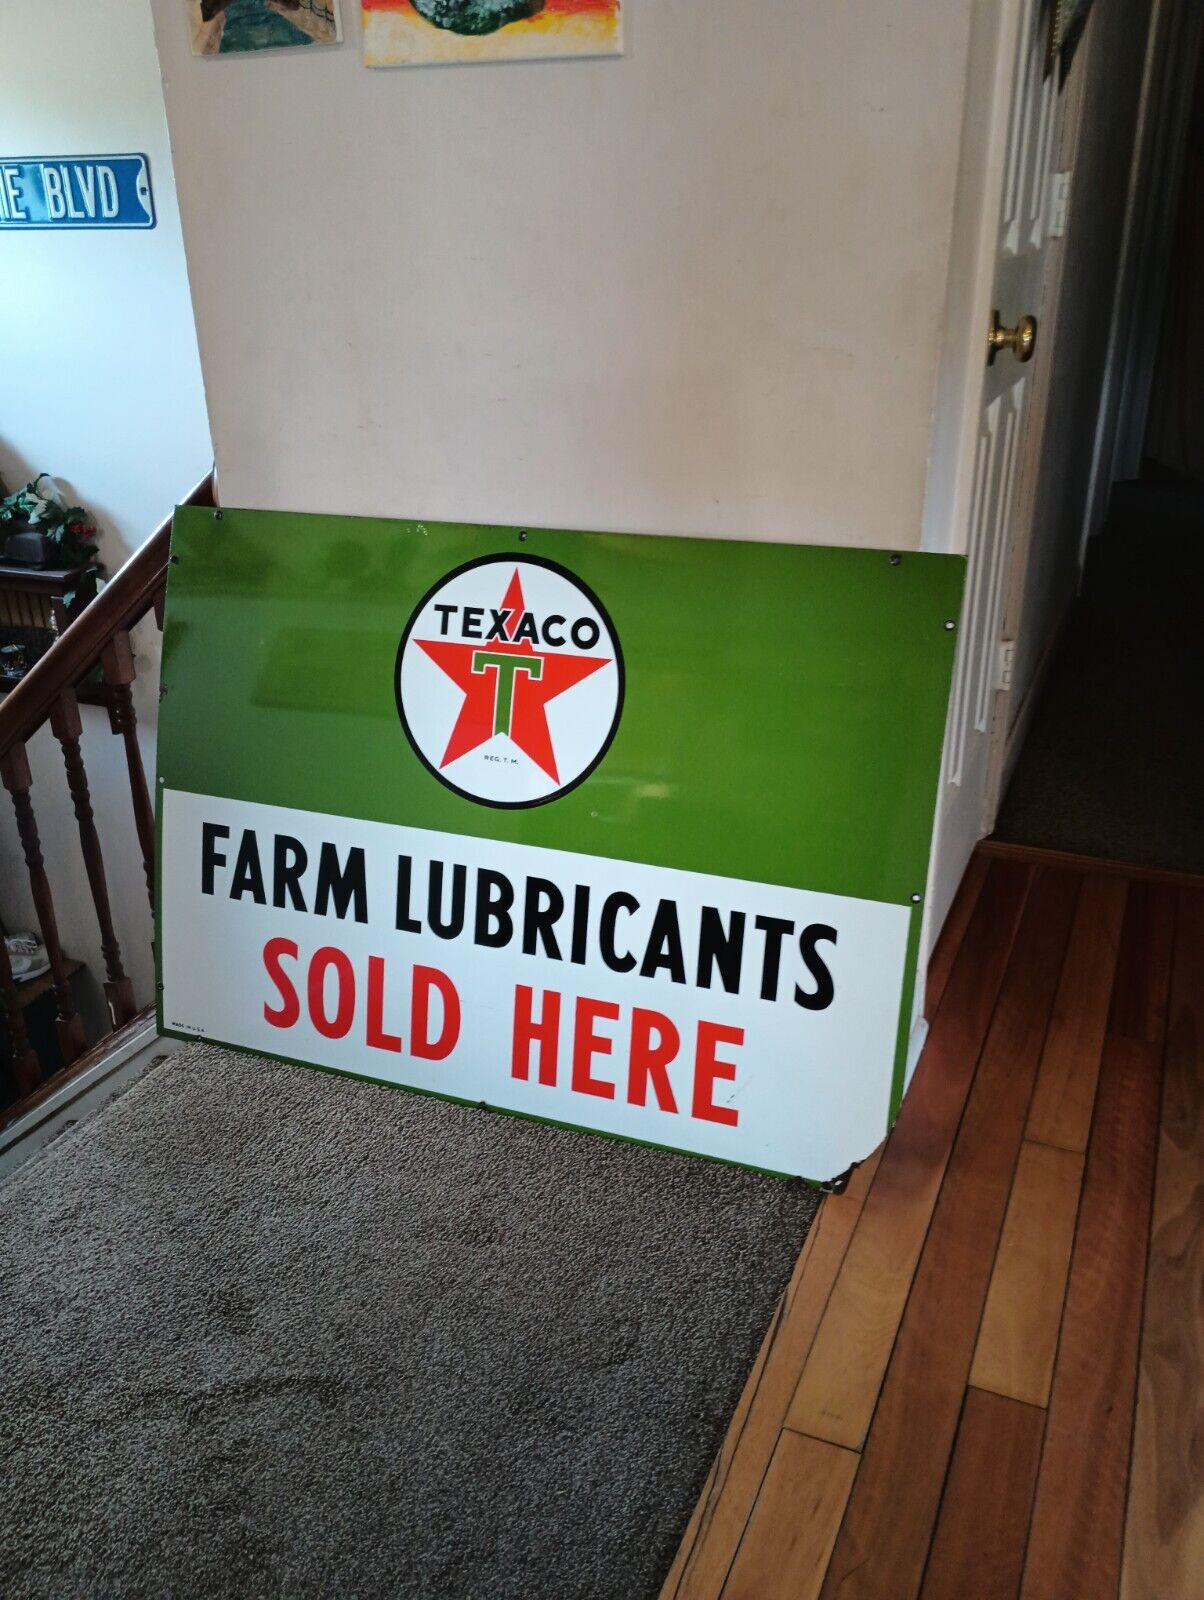 TEXACO FARM LUBRICANTS GAS OIL PORCELAIN GAS STATION SIGN ONLY ORIGINAL ON EBAY 